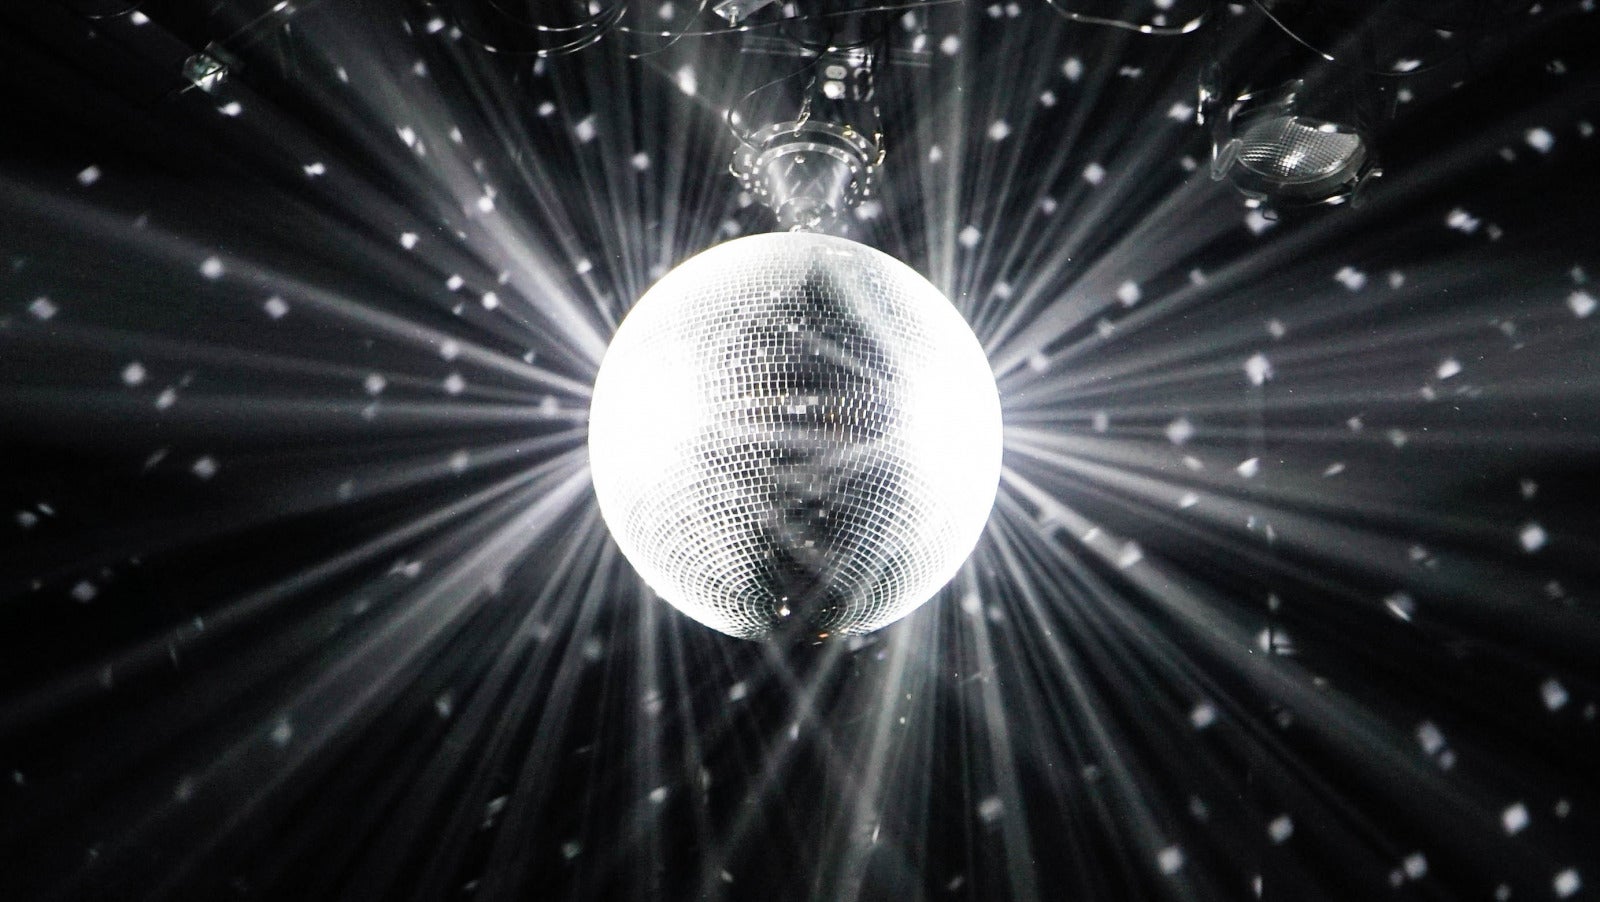 disco ball shining with white light